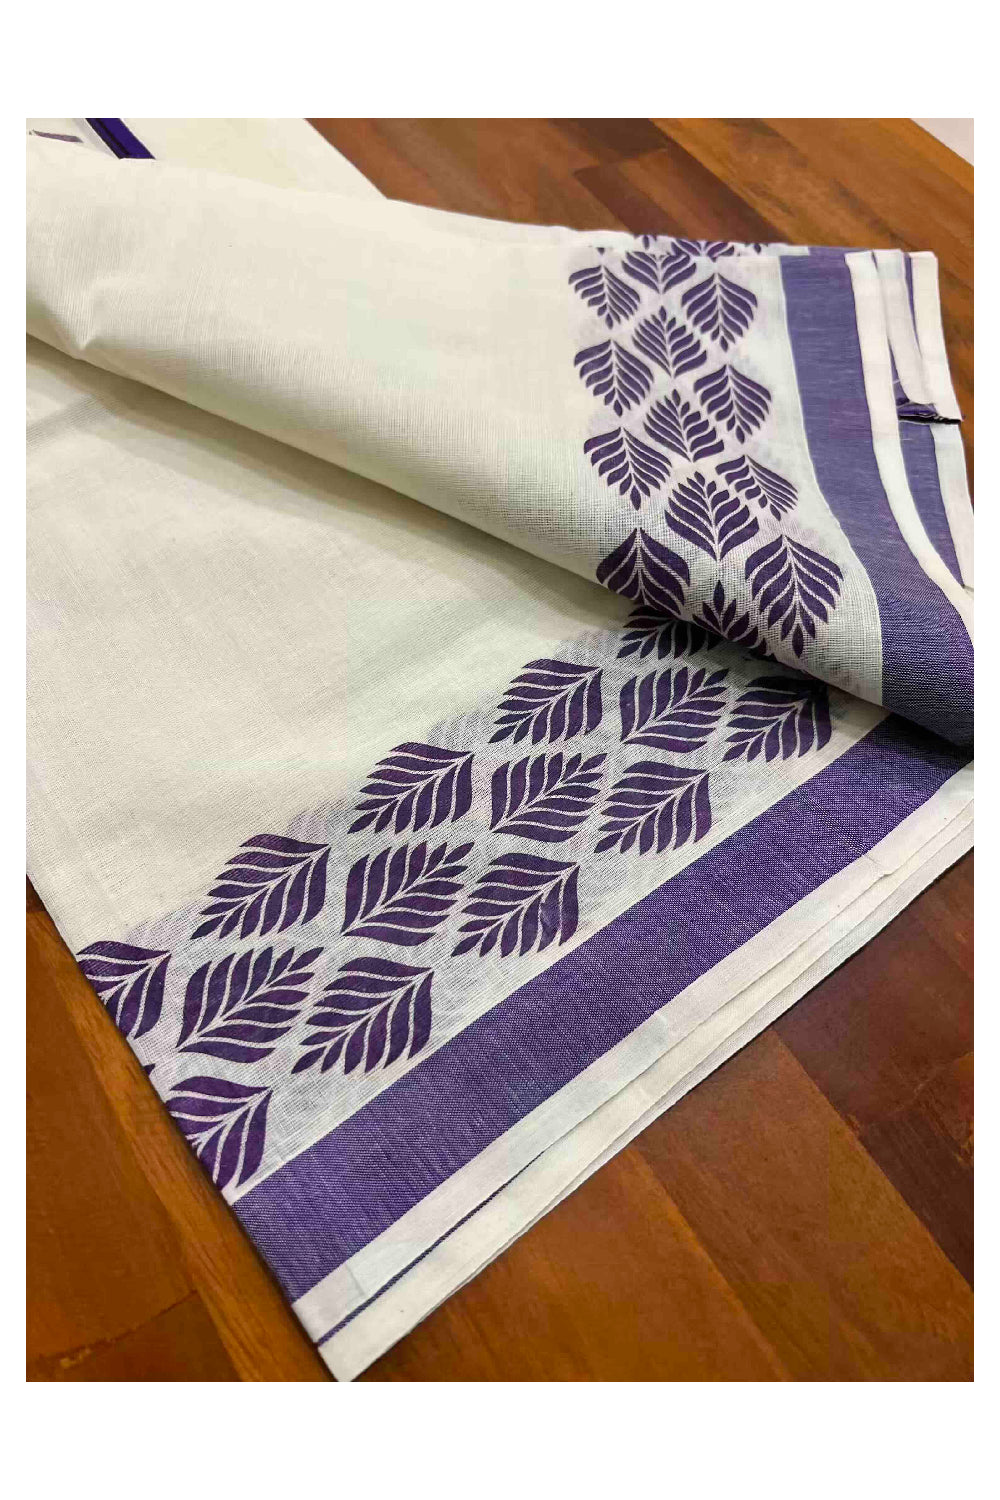 Kerala Cotton Single Set Mundu (Mundum Neriyathum) with Leaf Block Prints on Violet and Black Border